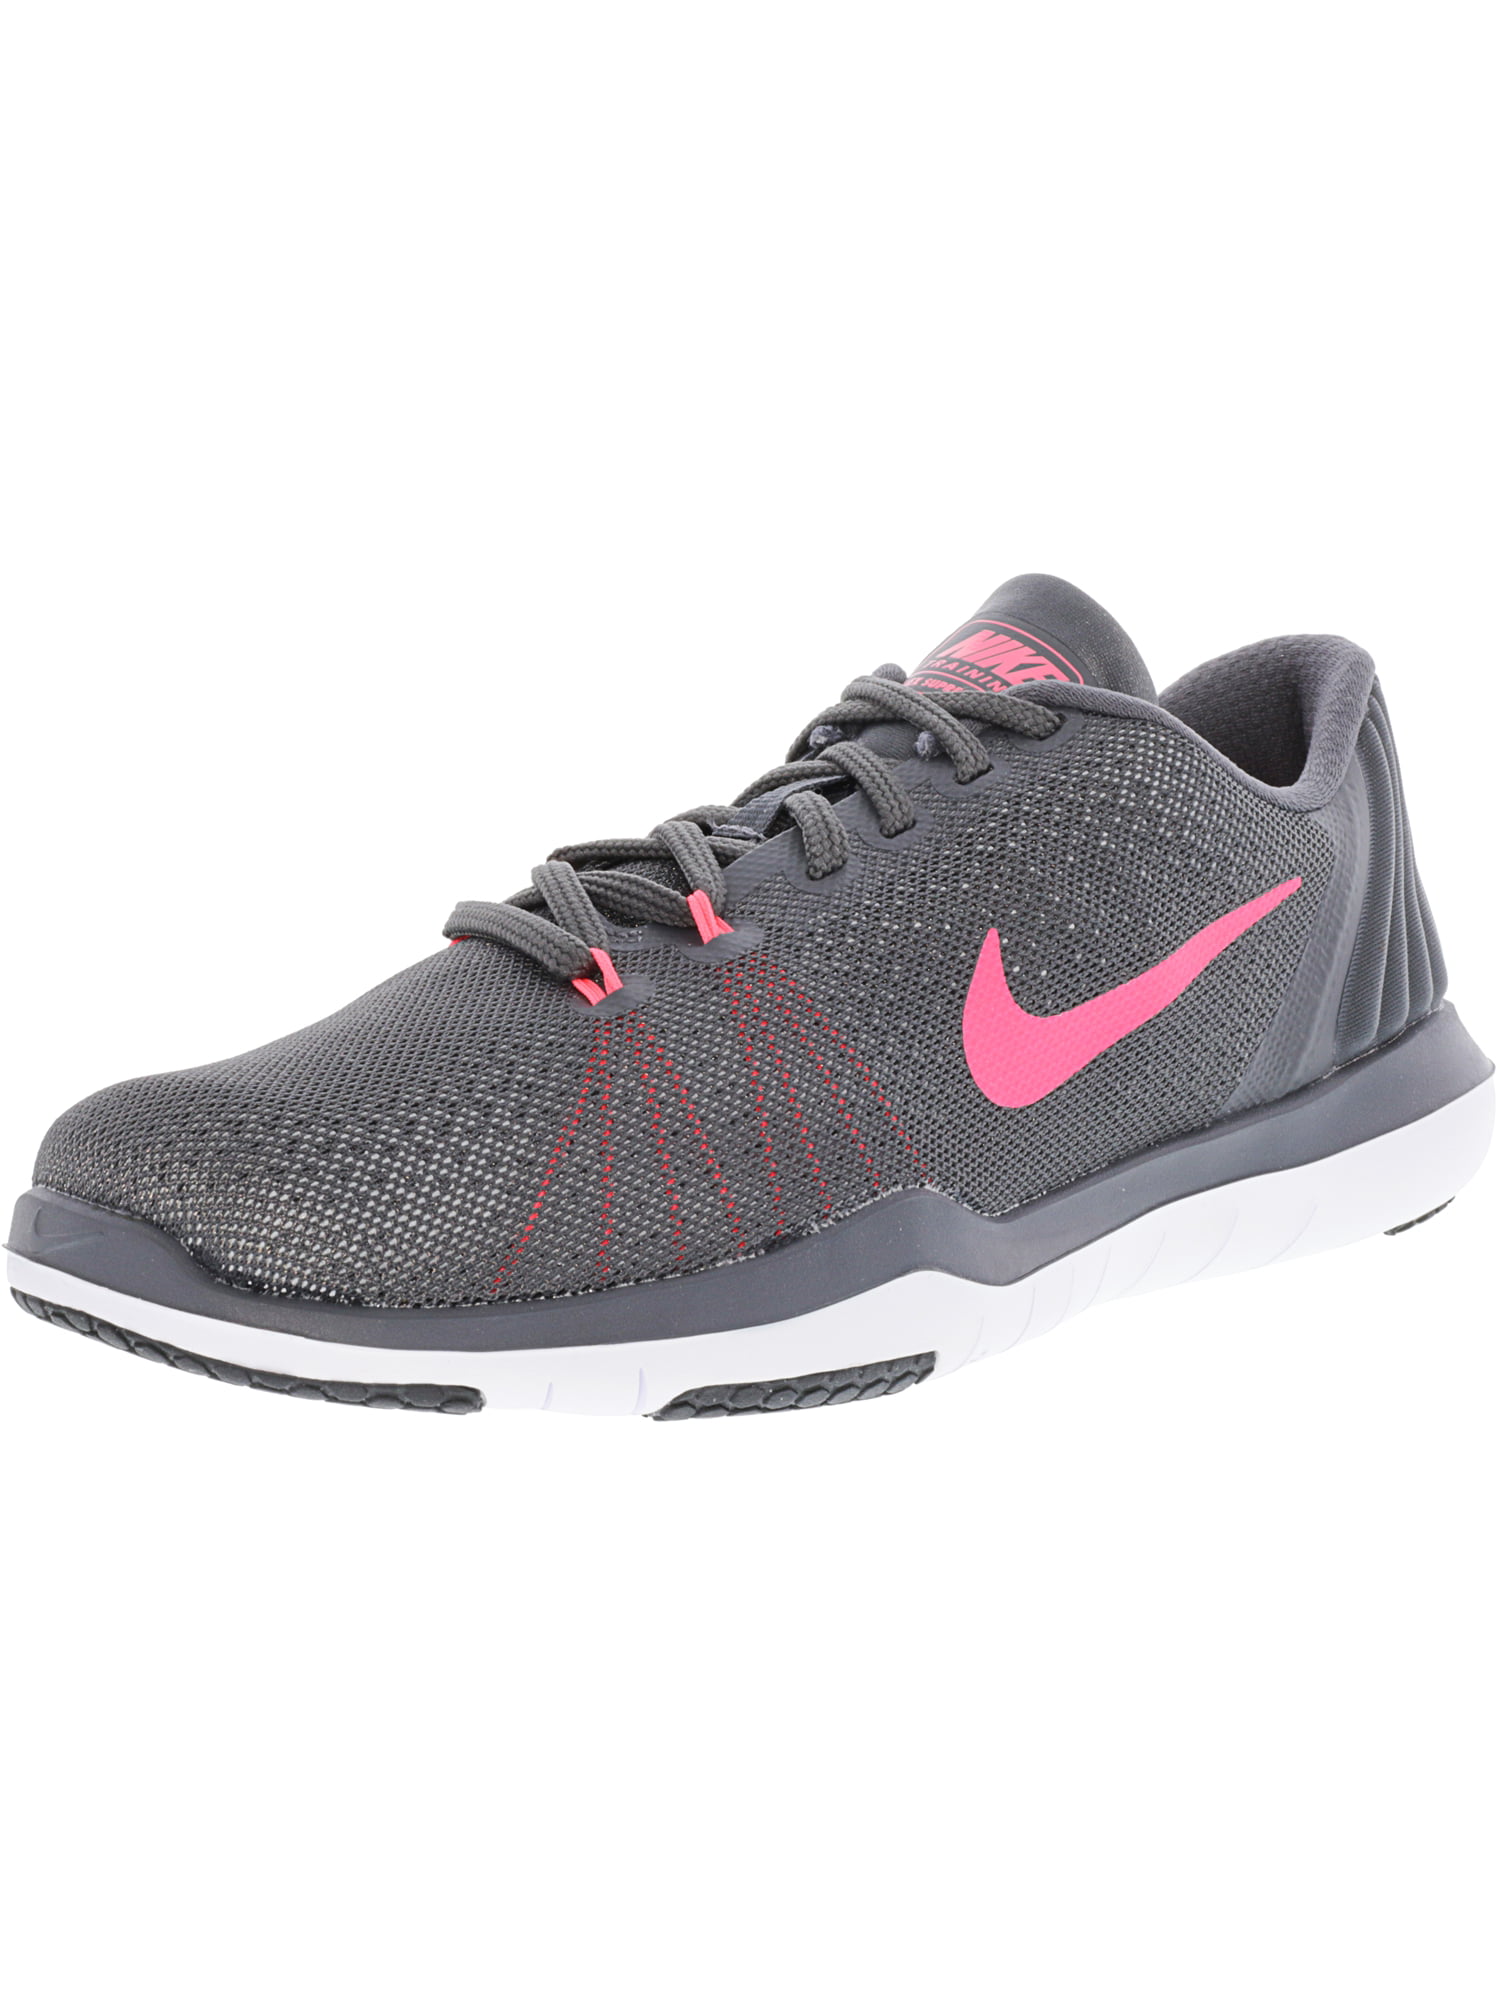 Nike Women's Flex Supreme 5 Dark Grey Hot Punch-White Ankle-High Running Shoe - 8.5W -